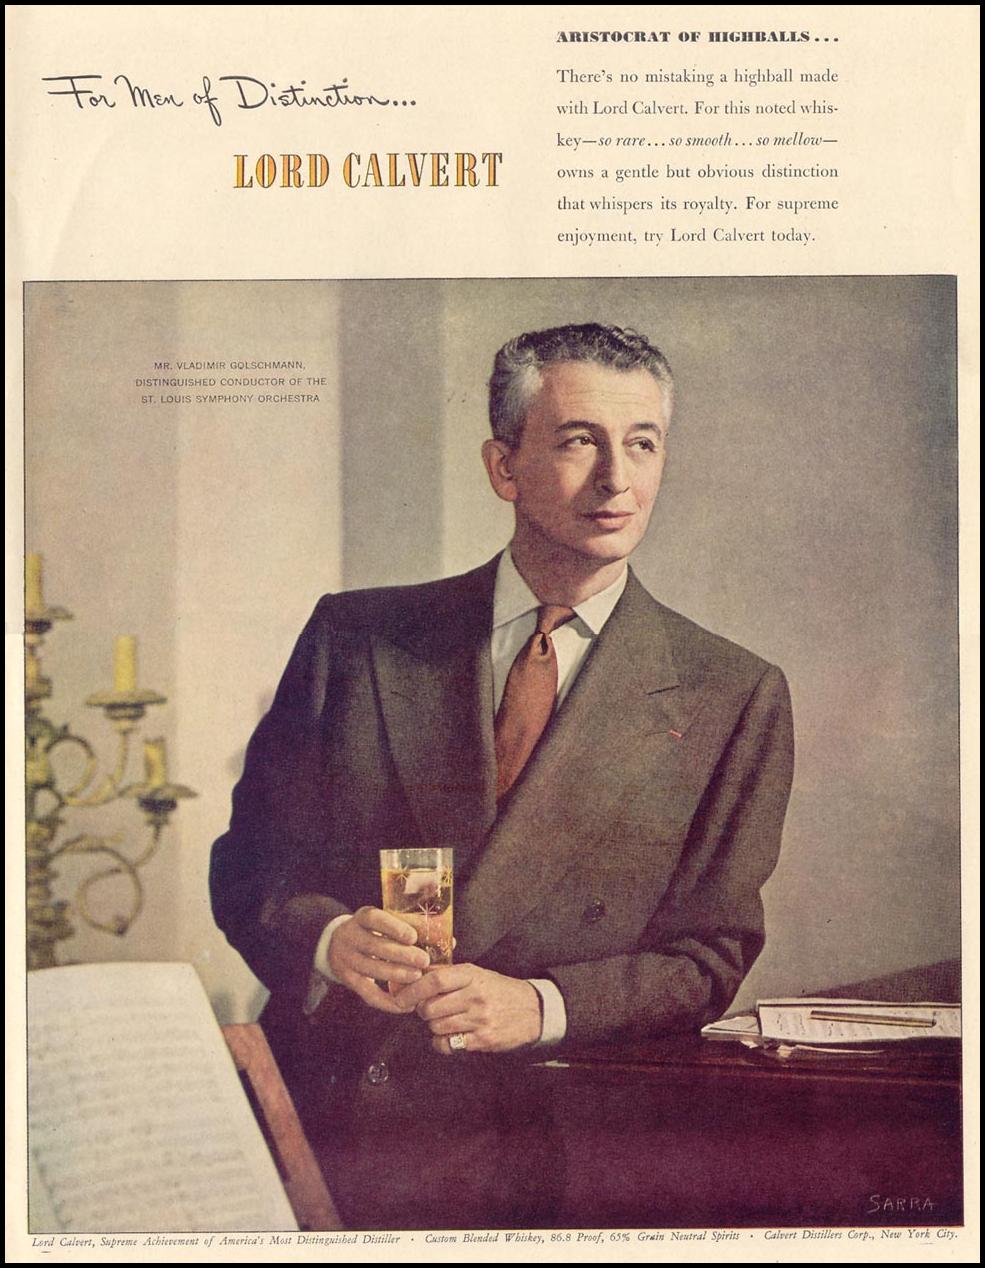 LORD CALVERT WHISKEY
LIFE
11/15/1948